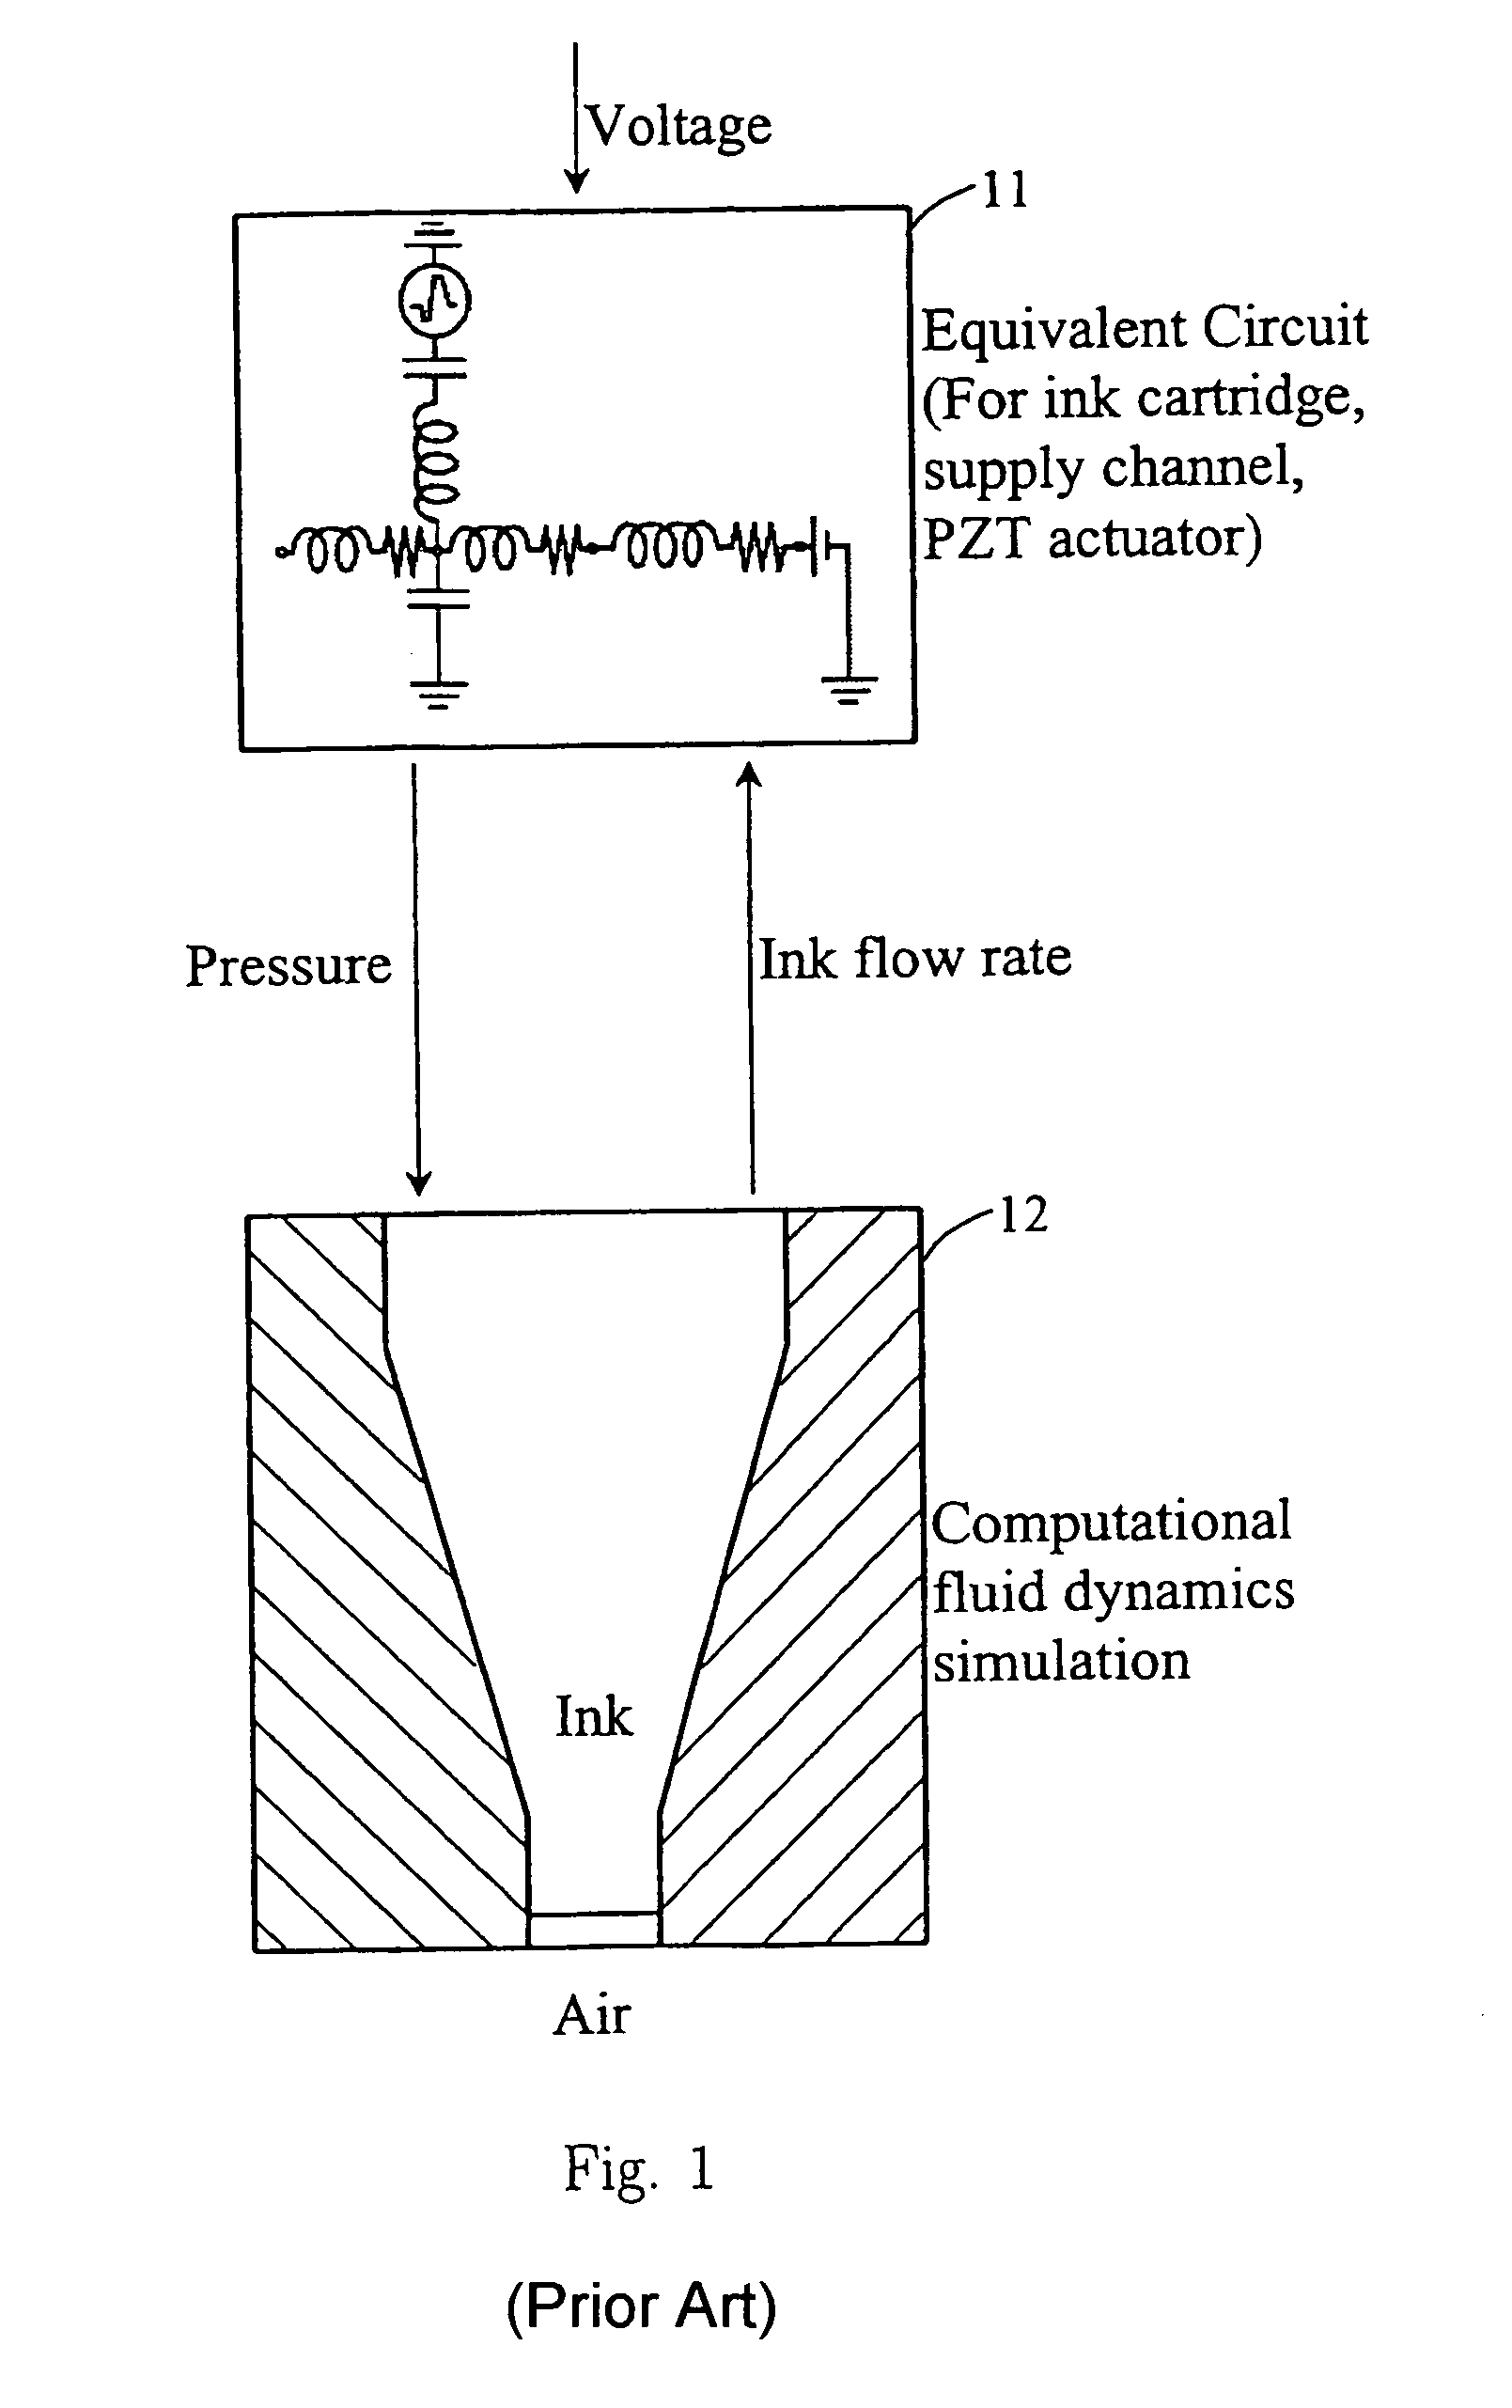 Coupled quadrilateral grid level set scheme for piezoelectric ink-jet simulation